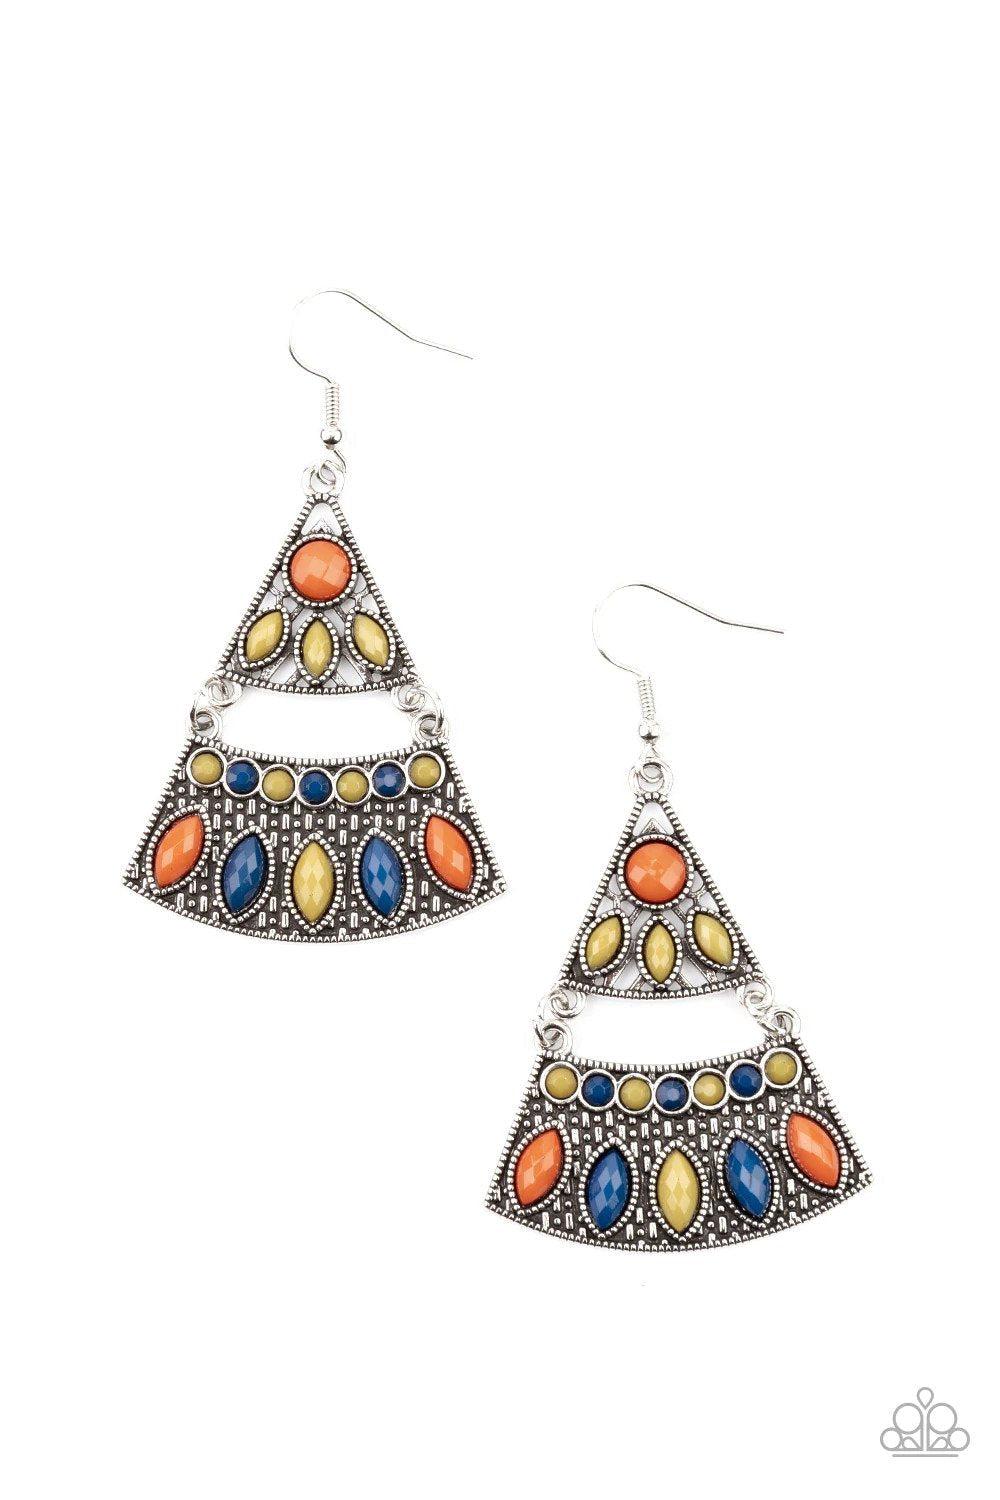 Desert Fiesta Multi Earrings - Paparazzi Accessories- lightbox - CarasShop.com - $5 Jewelry by Cara Jewels